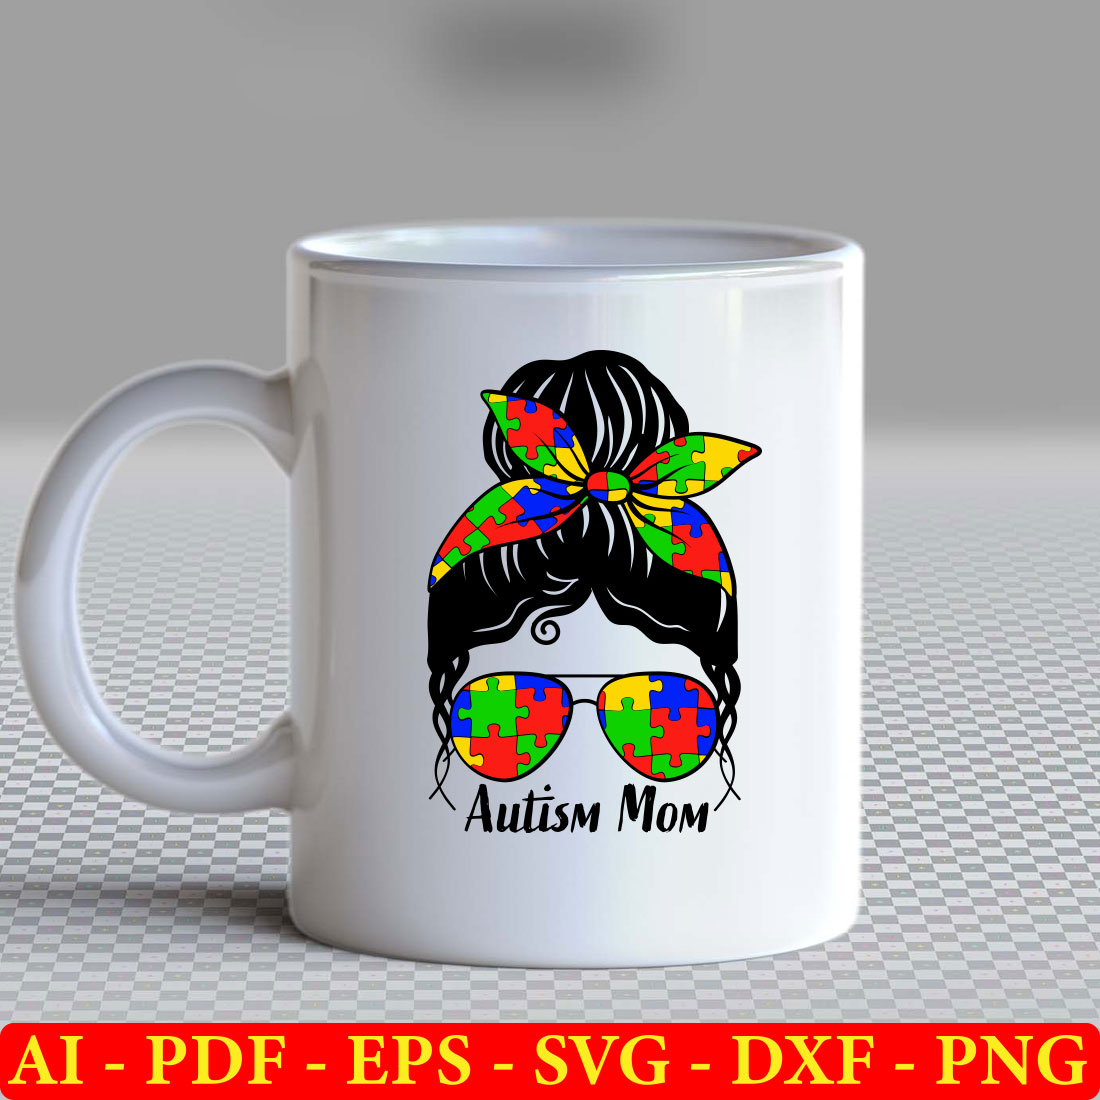 White coffee mug with autism mom on it.